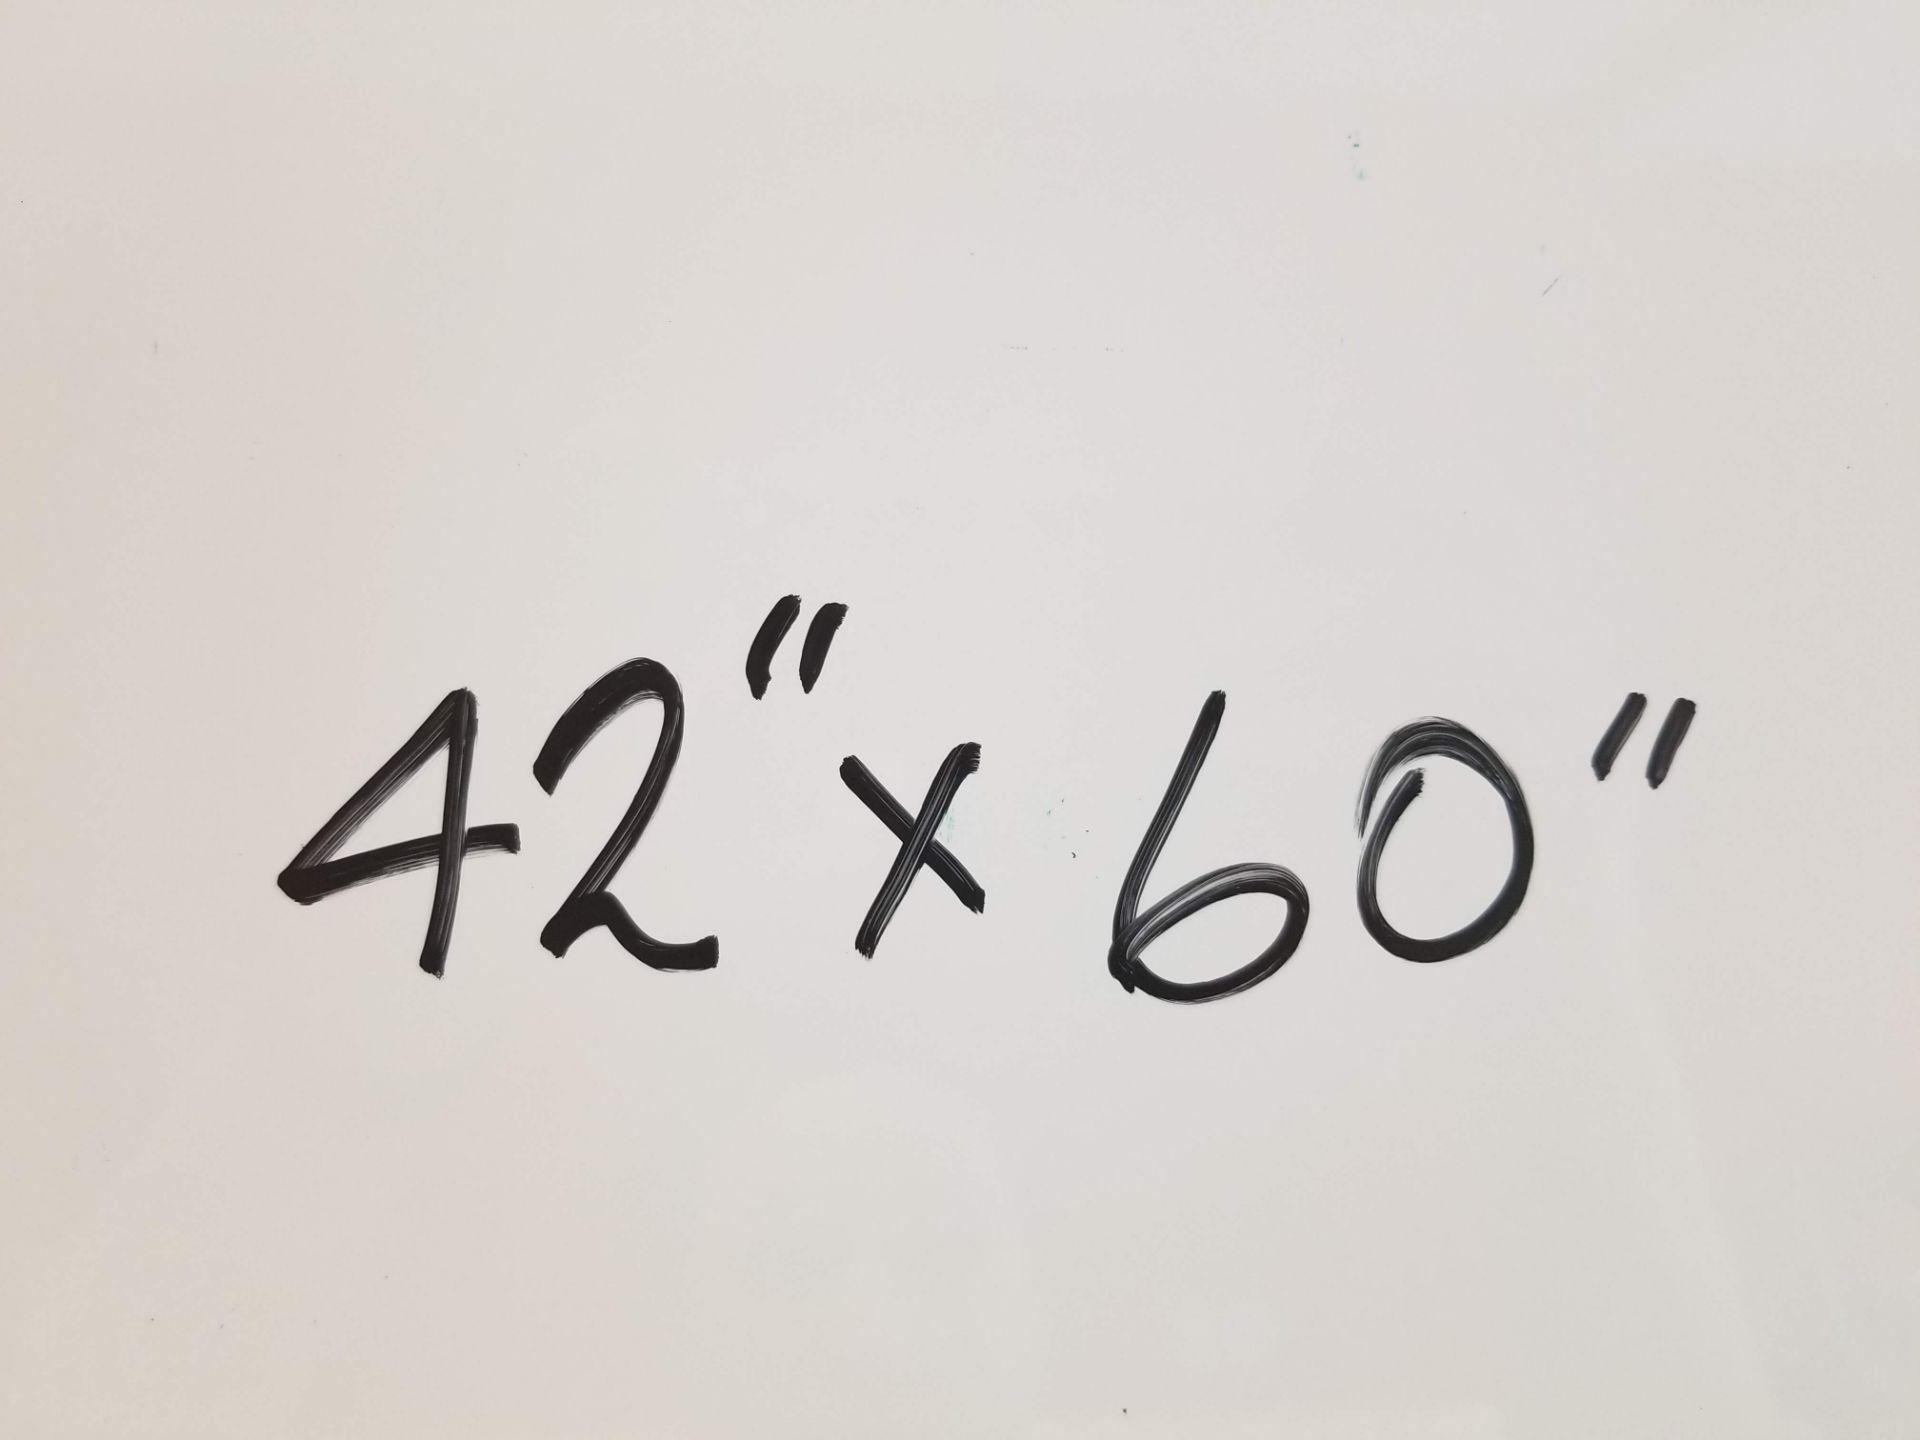 WHITE BOARD - 42" x 60" - Image 3 of 3